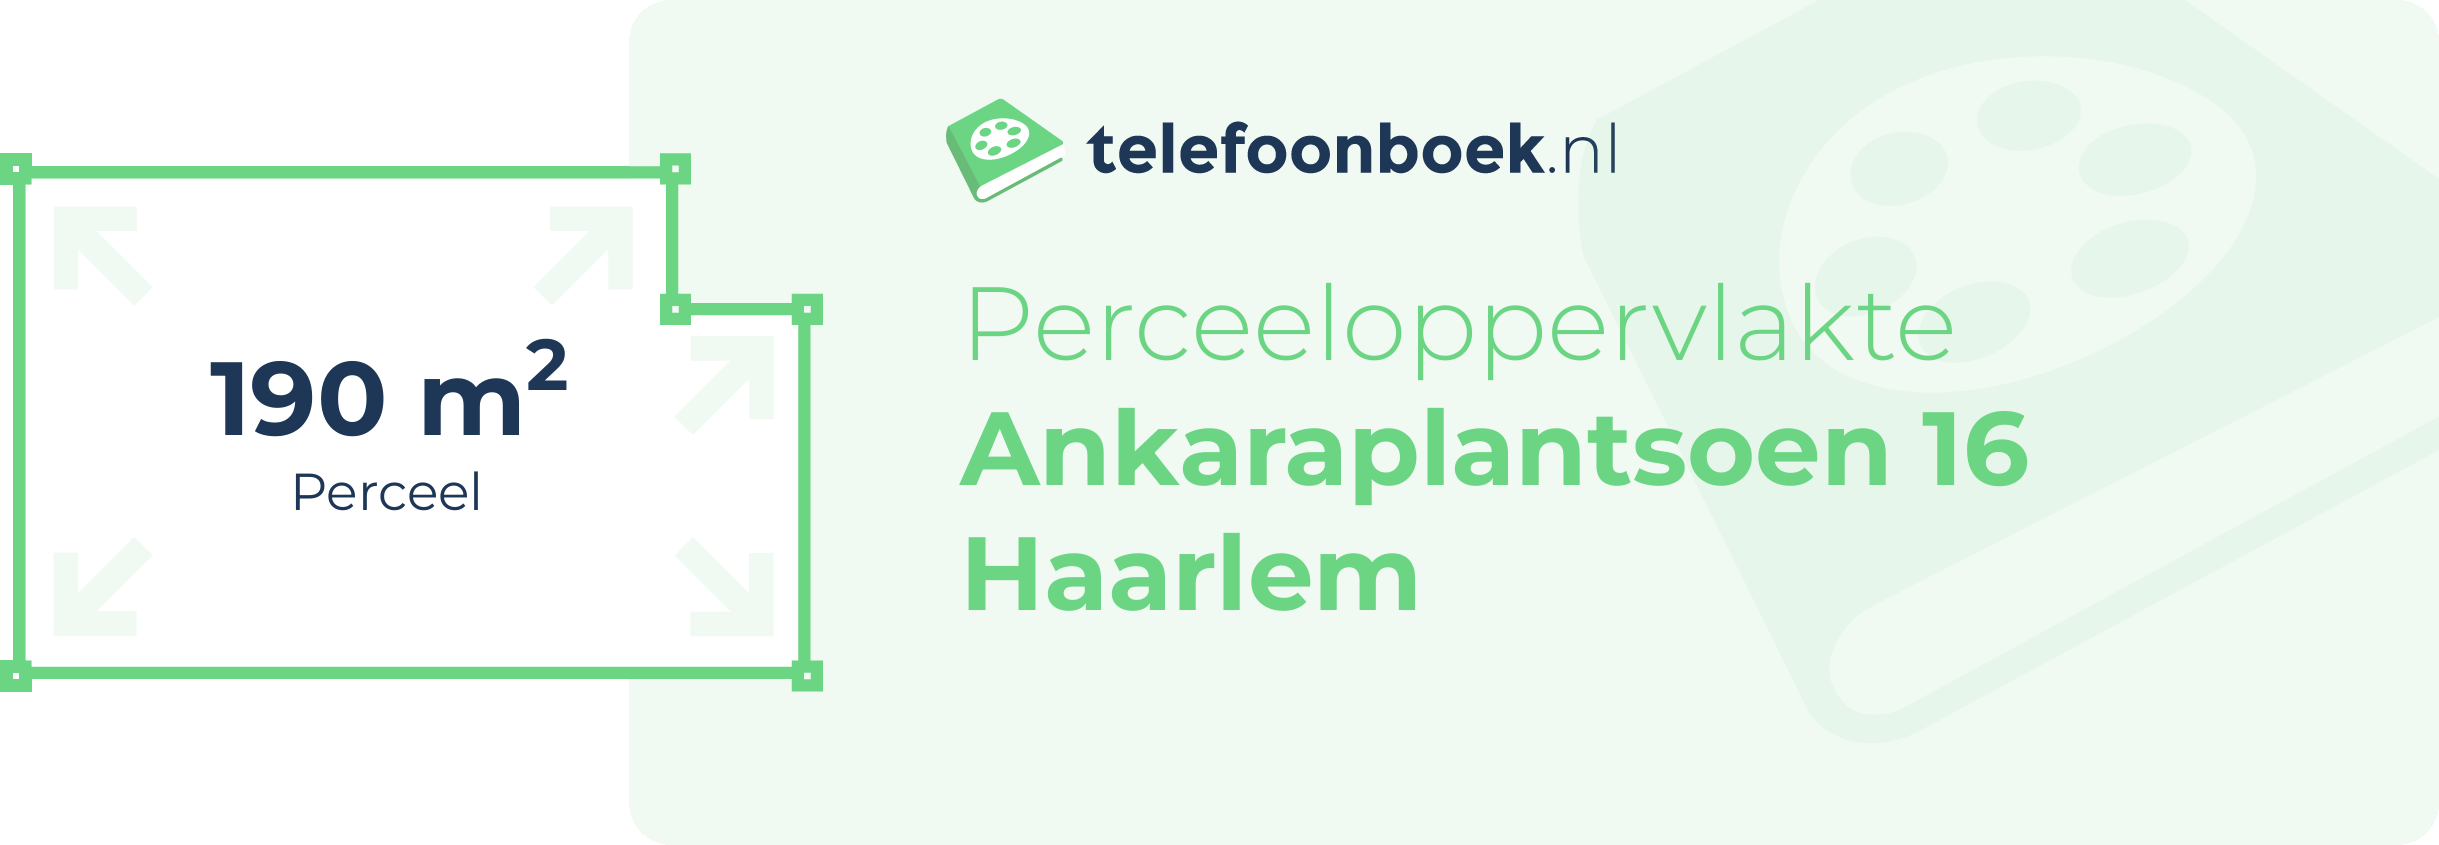 Perceeloppervlakte Ankaraplantsoen 16 Haarlem